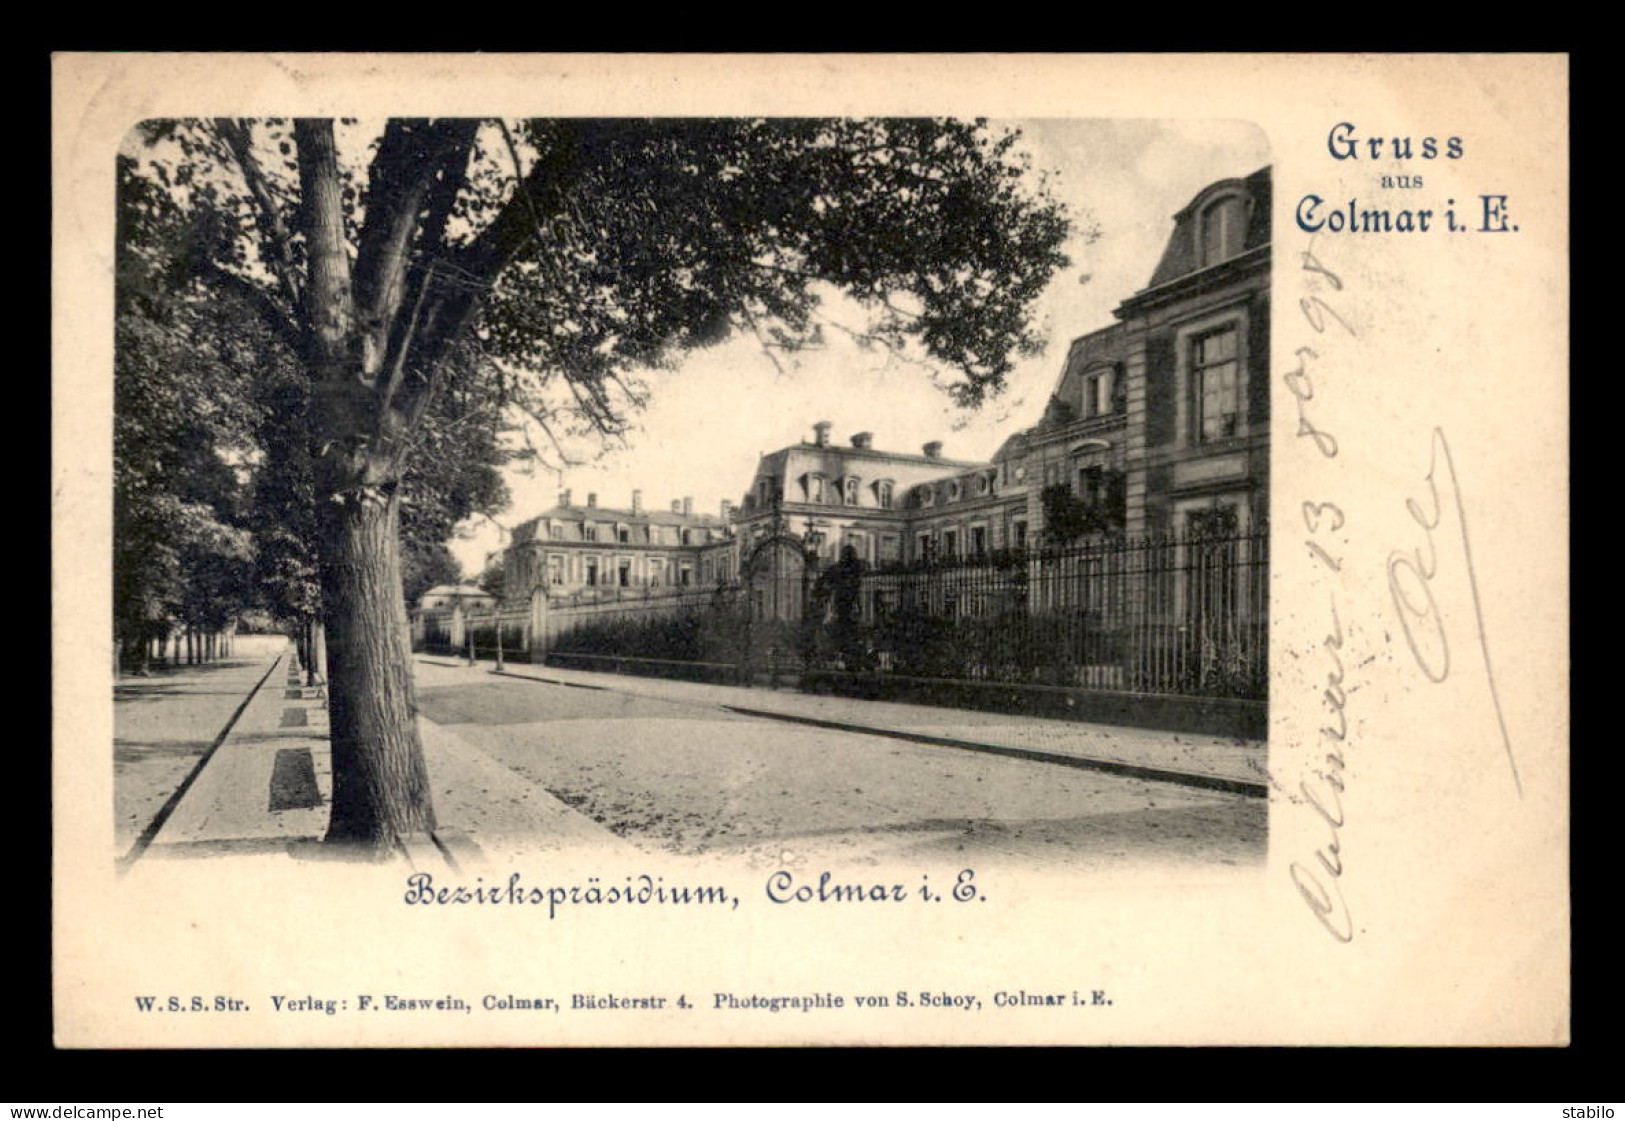 68 - COLMAR - BESISCHSPRASIDIUM - VOYAGE  EN 1898 - Colmar